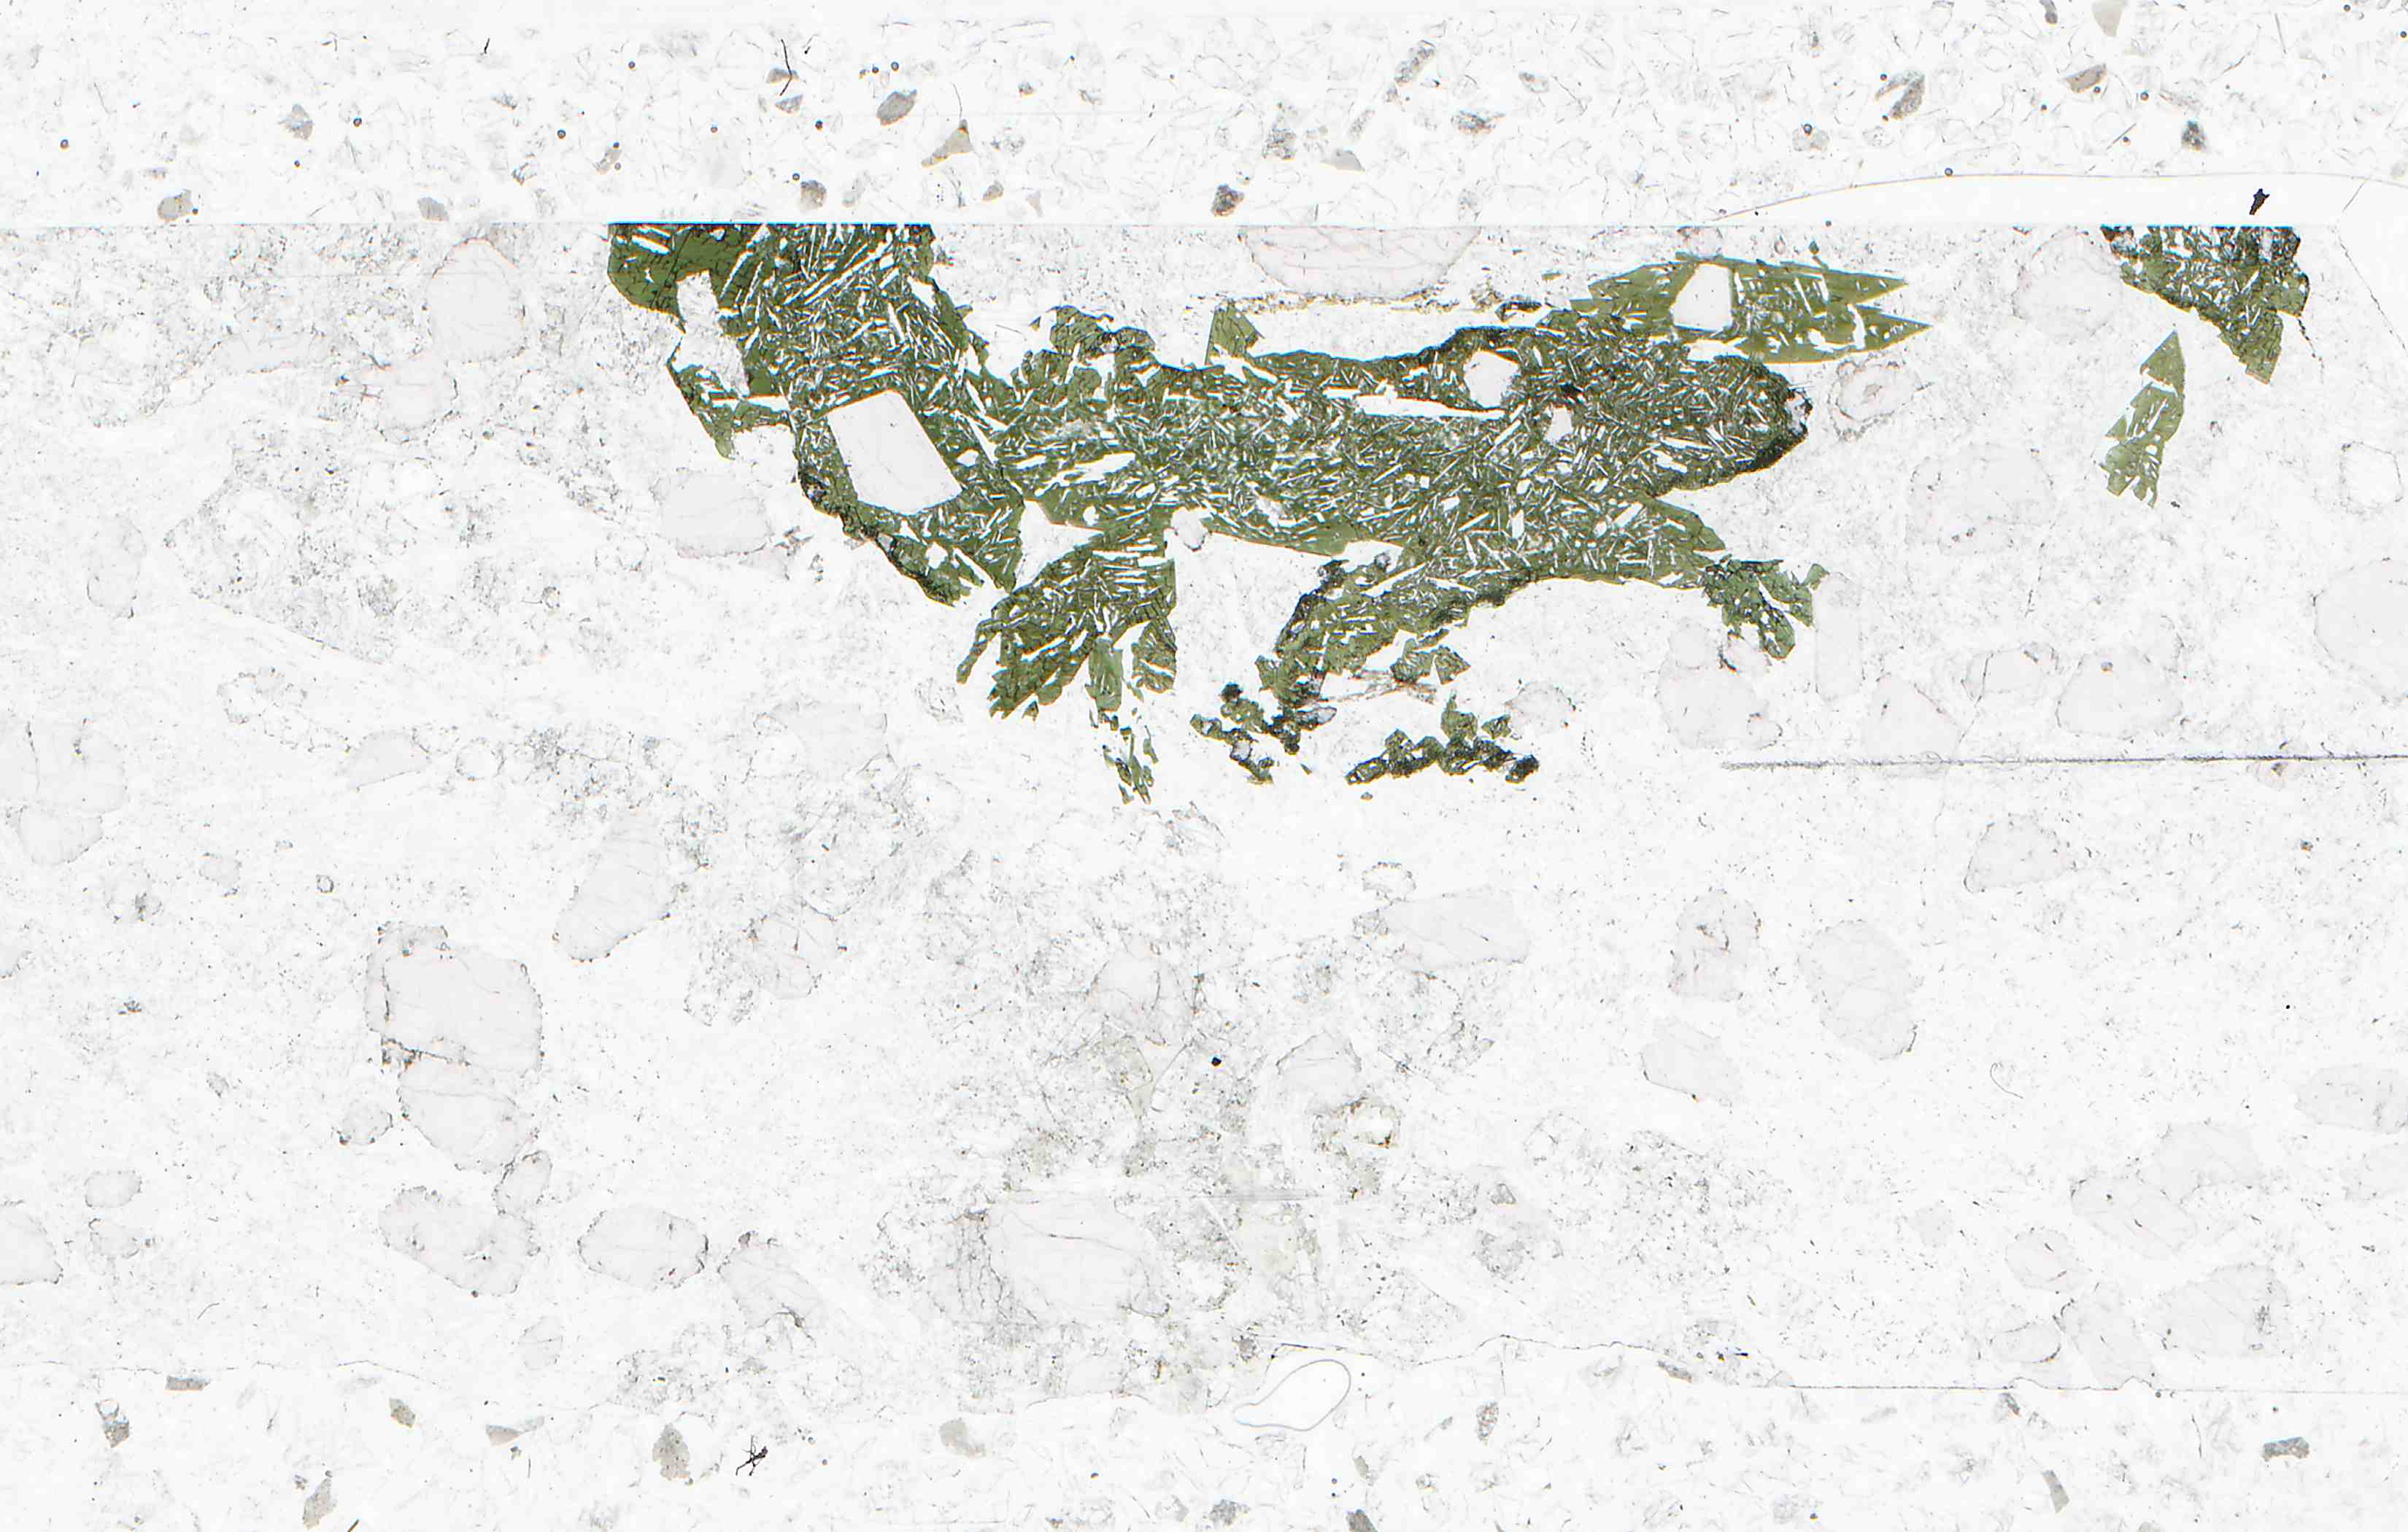 Ilimaussaq Greenland eudialyte kakortokite in thin section